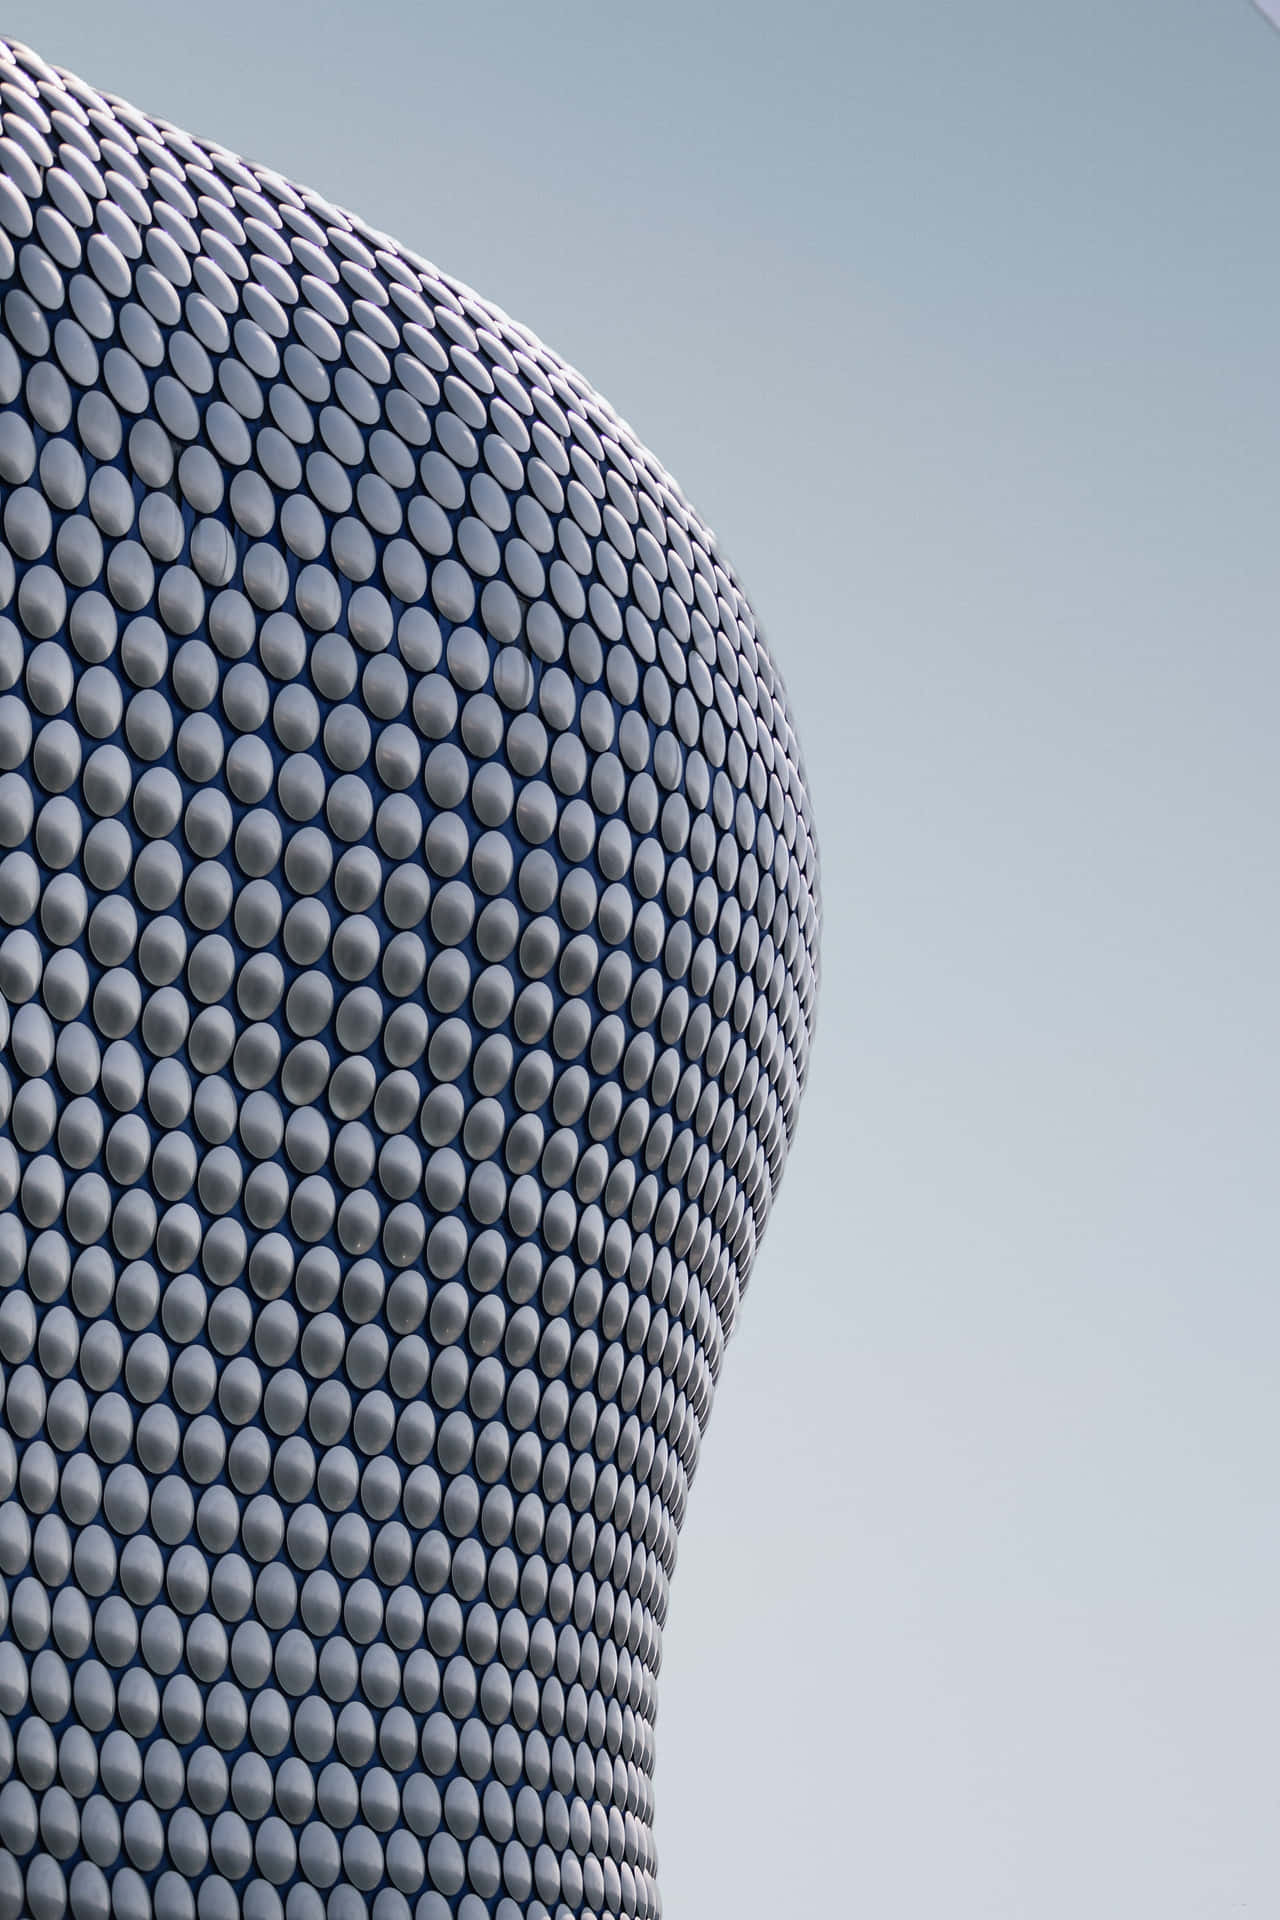 Modern Iphone Selfridges Building Birmingham Wallpaper